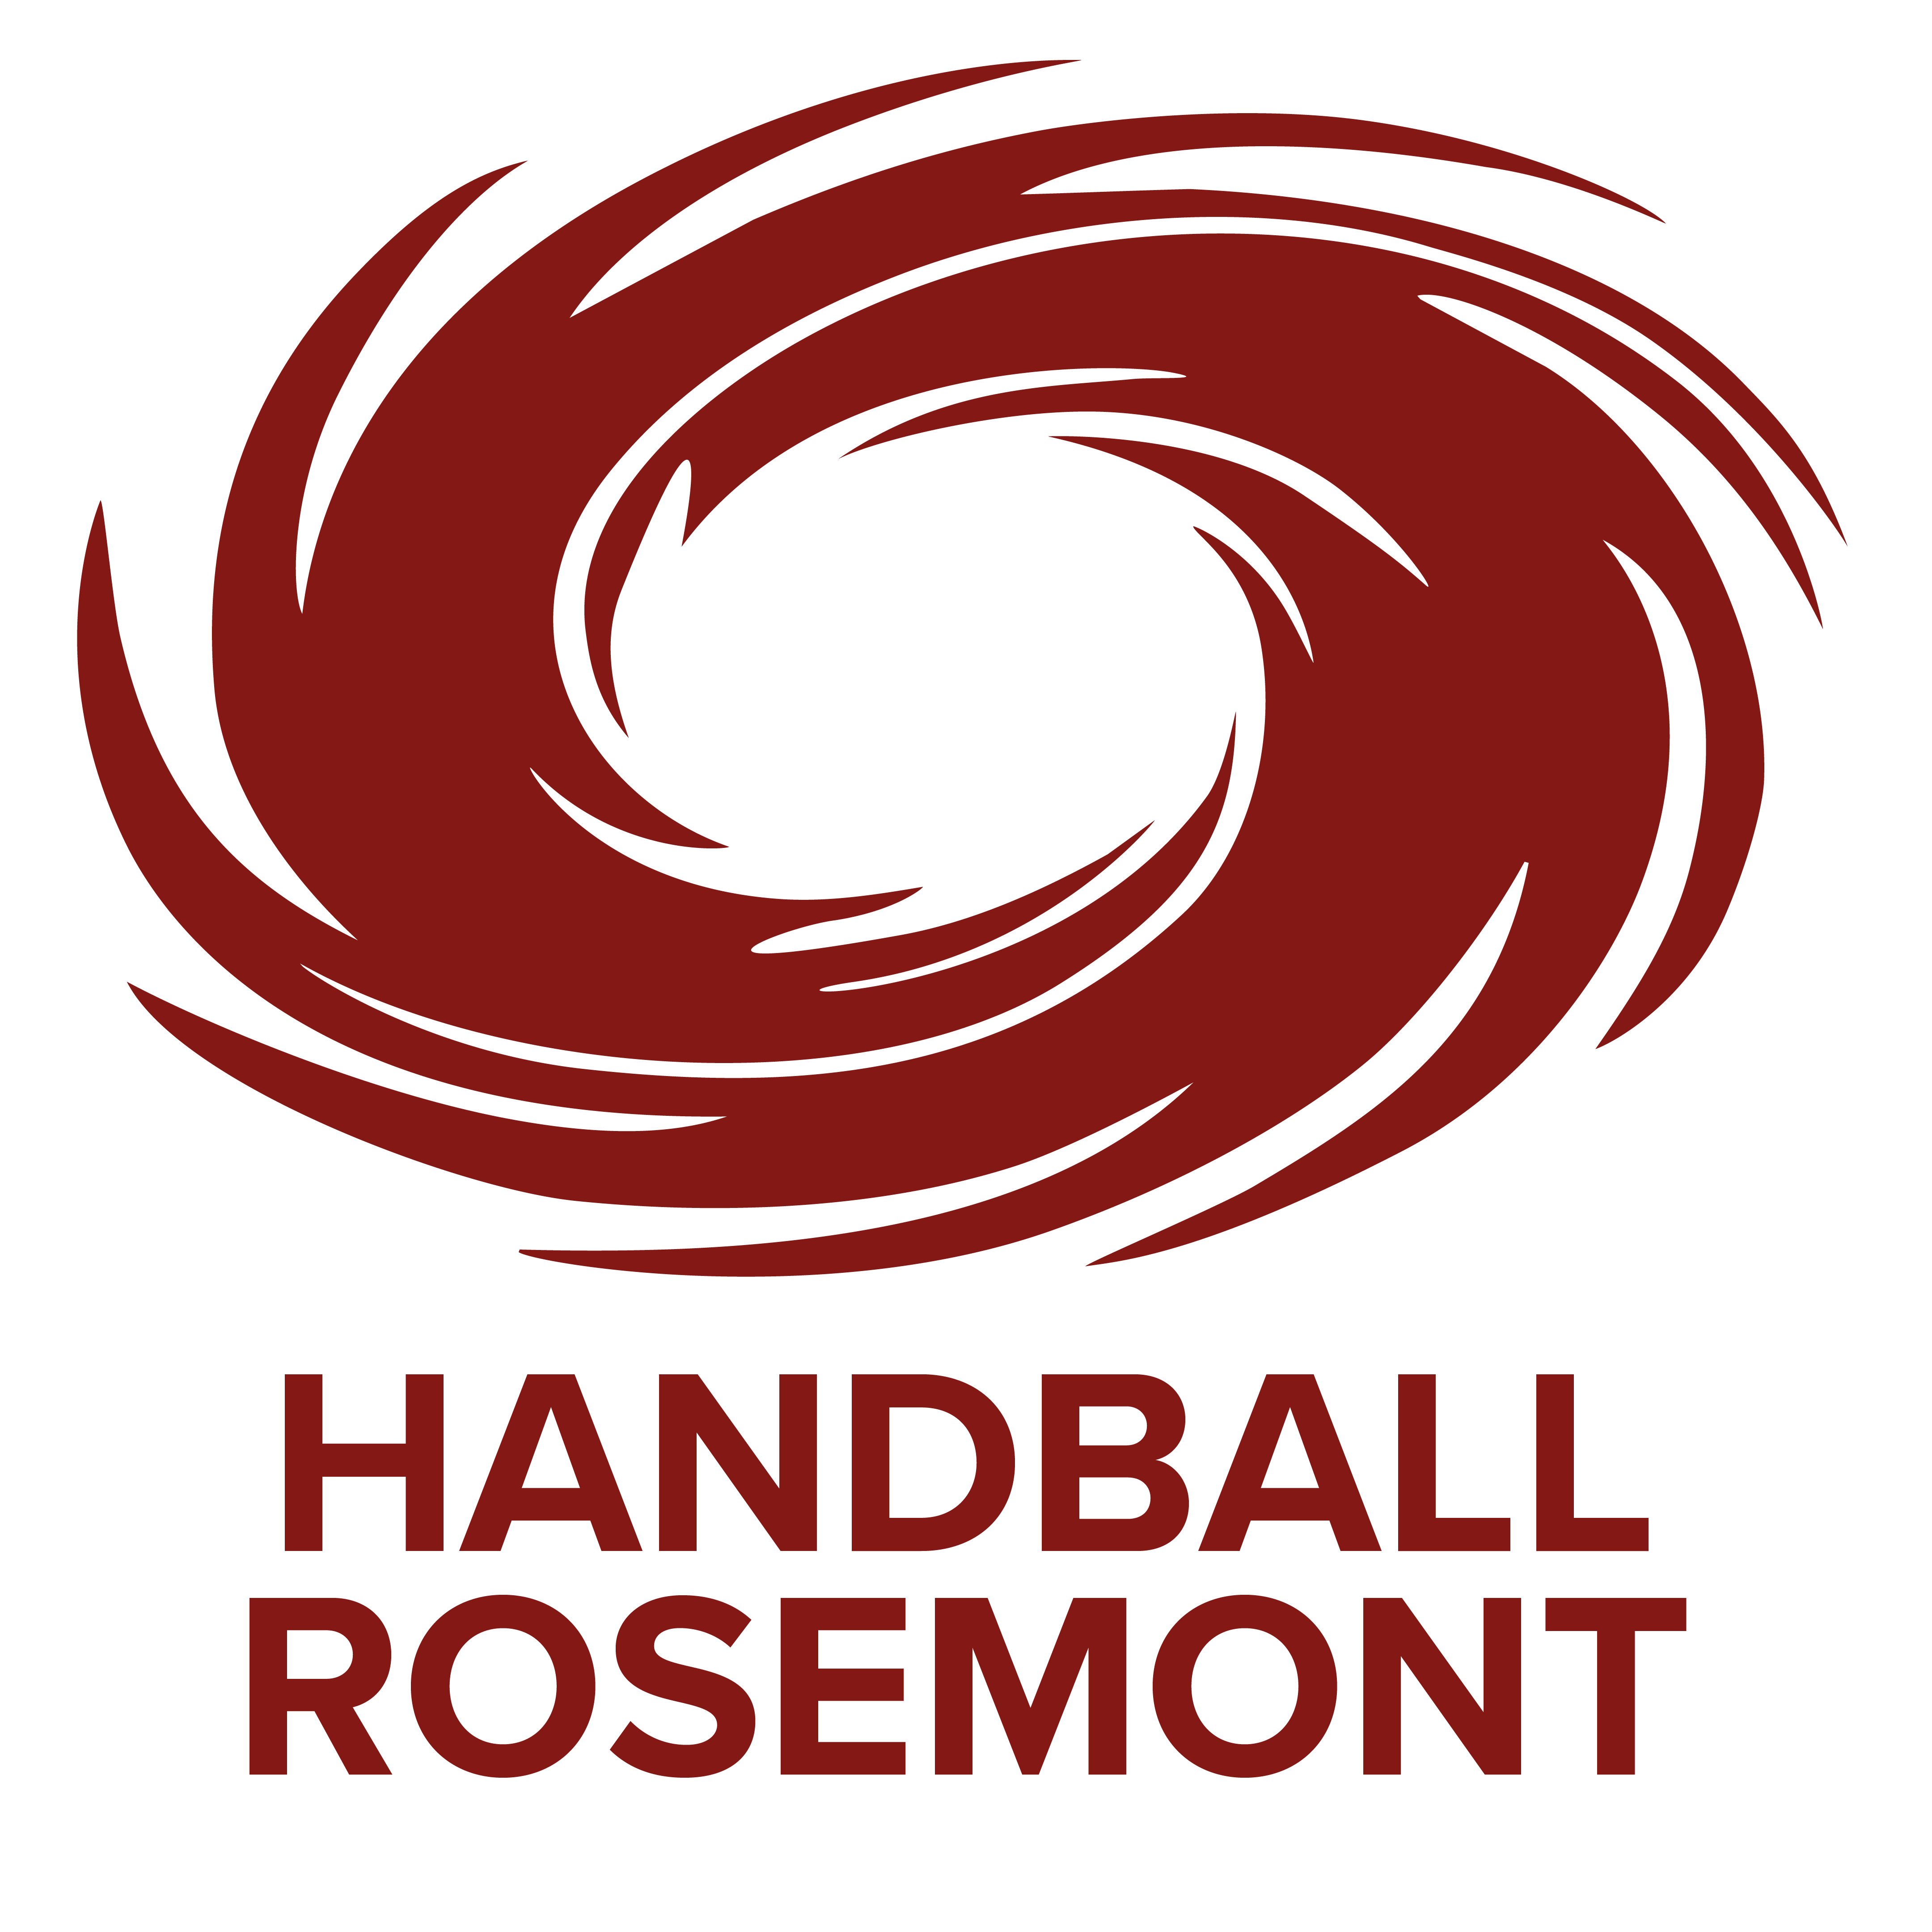 CLUB DE HANDBALL DE ROSEMONT, À MONTRÉAL